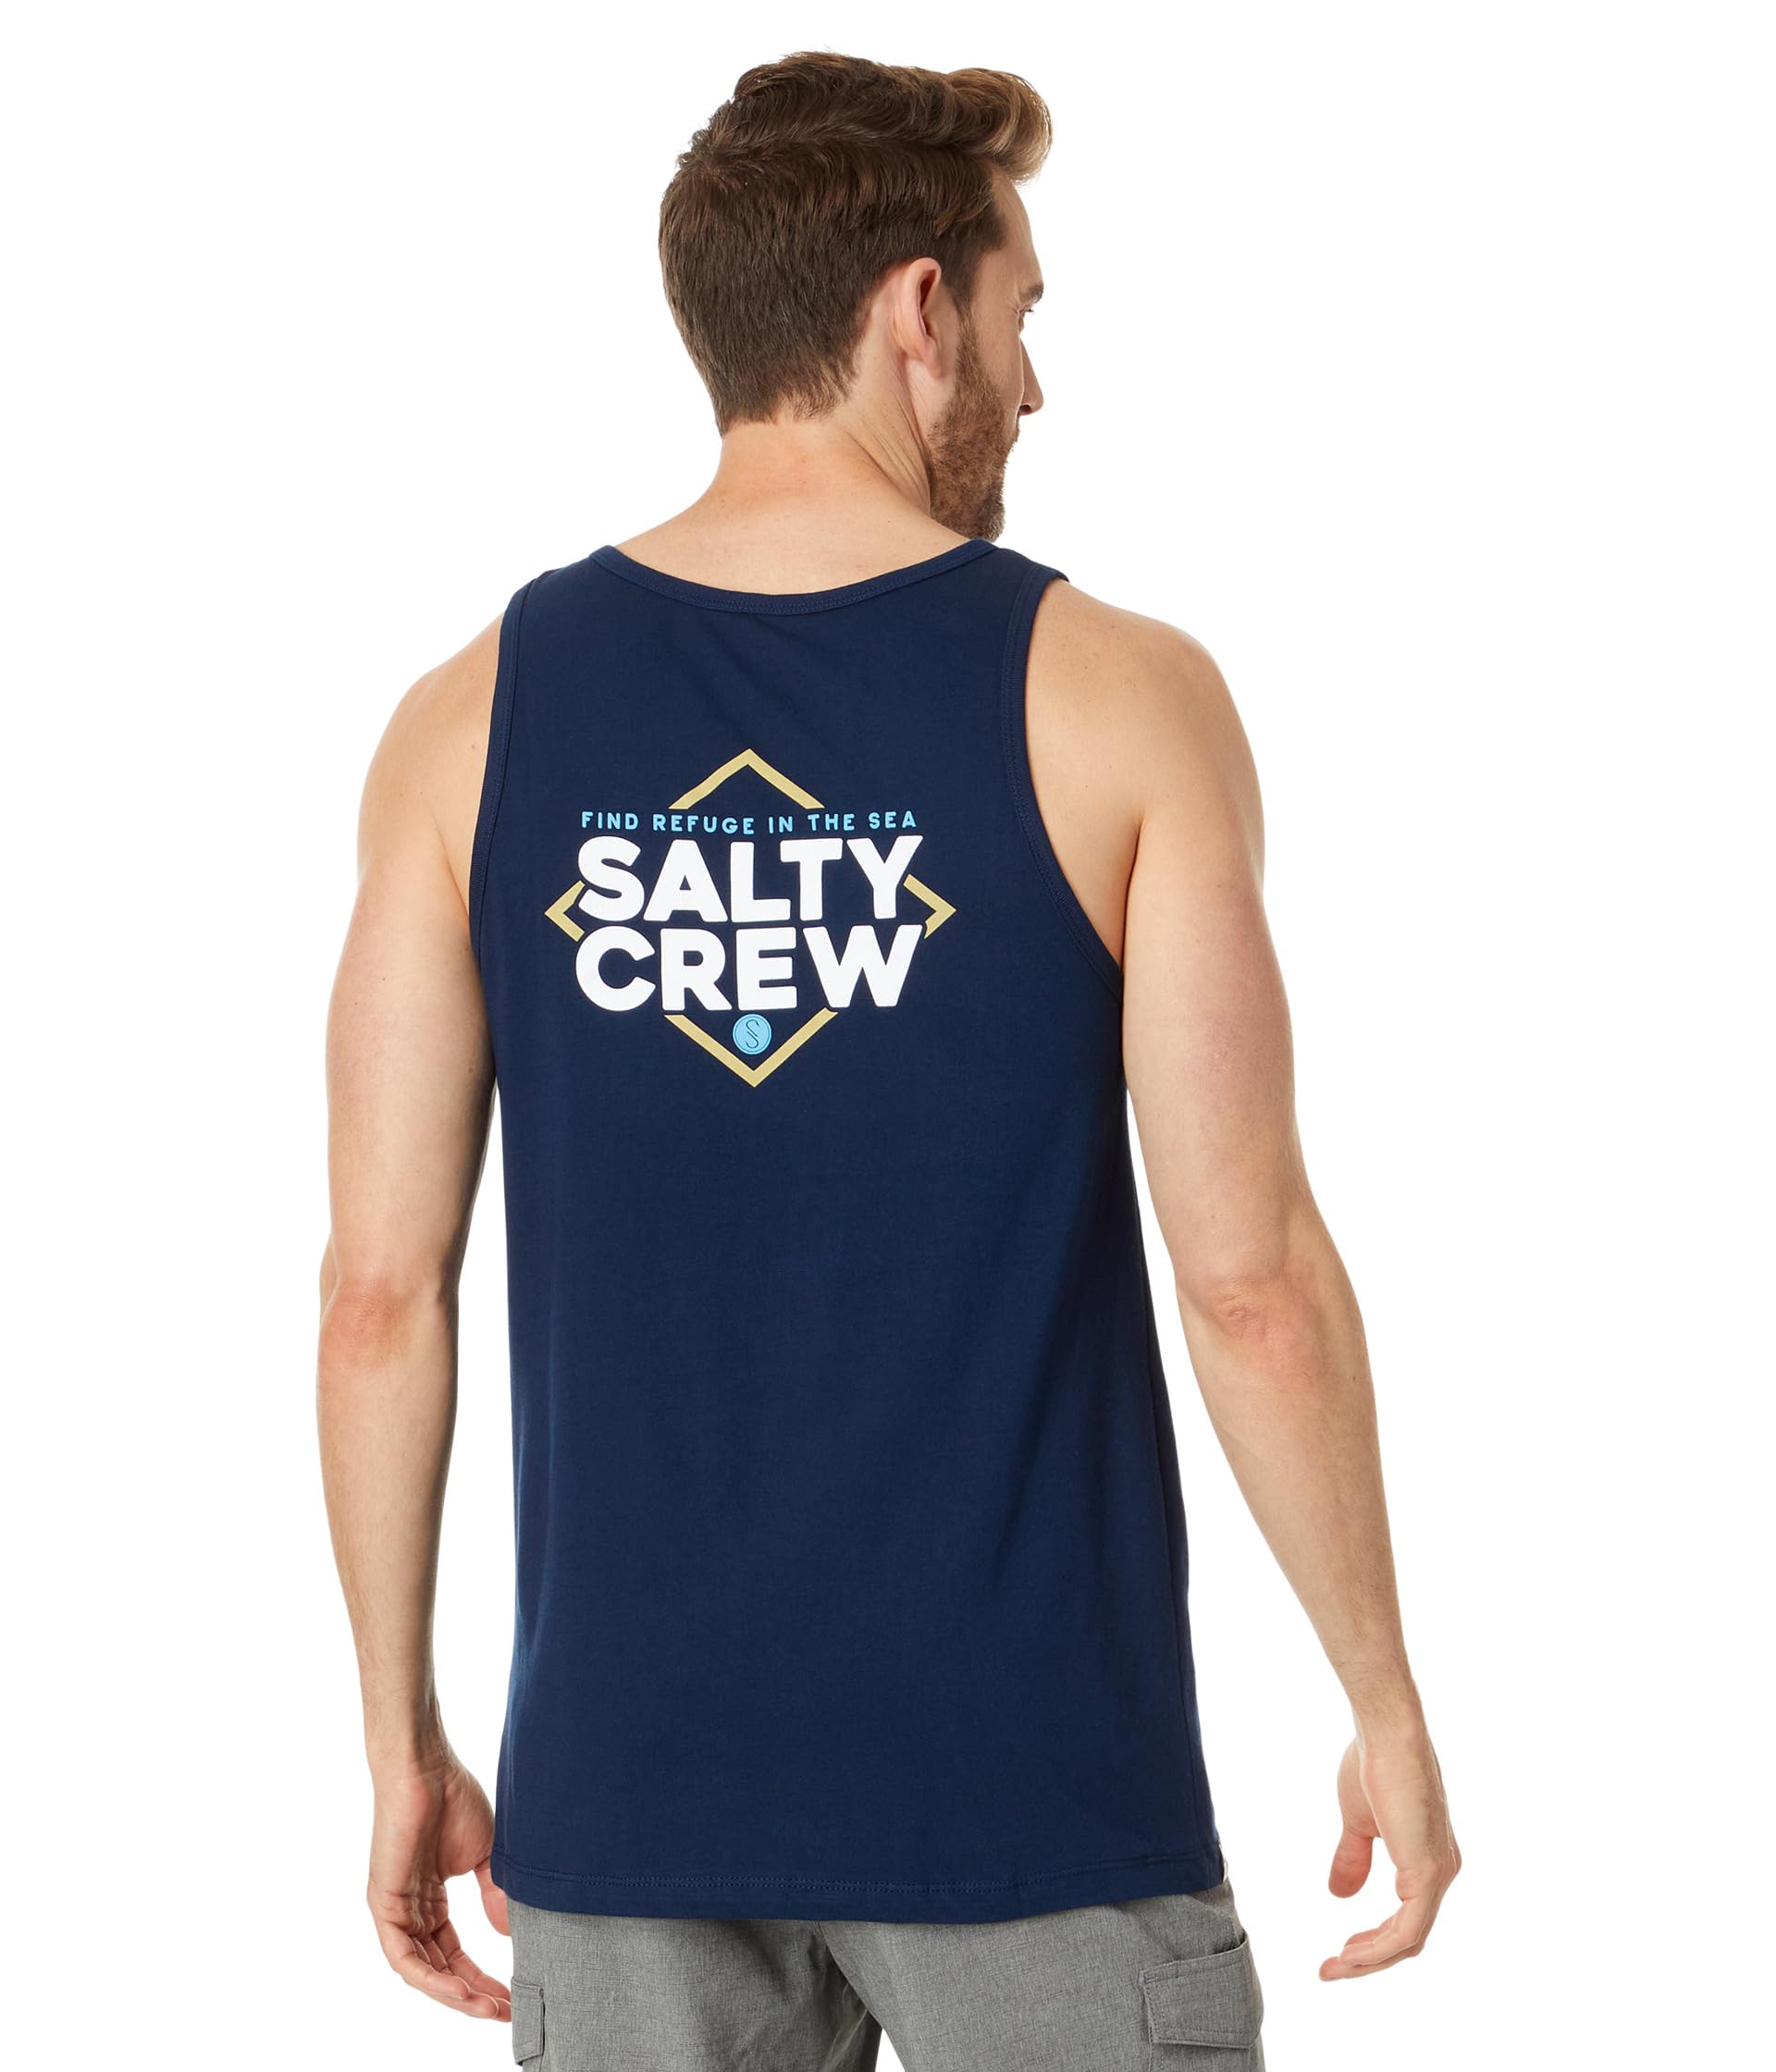 Нет слабого резервуара Salty Crew